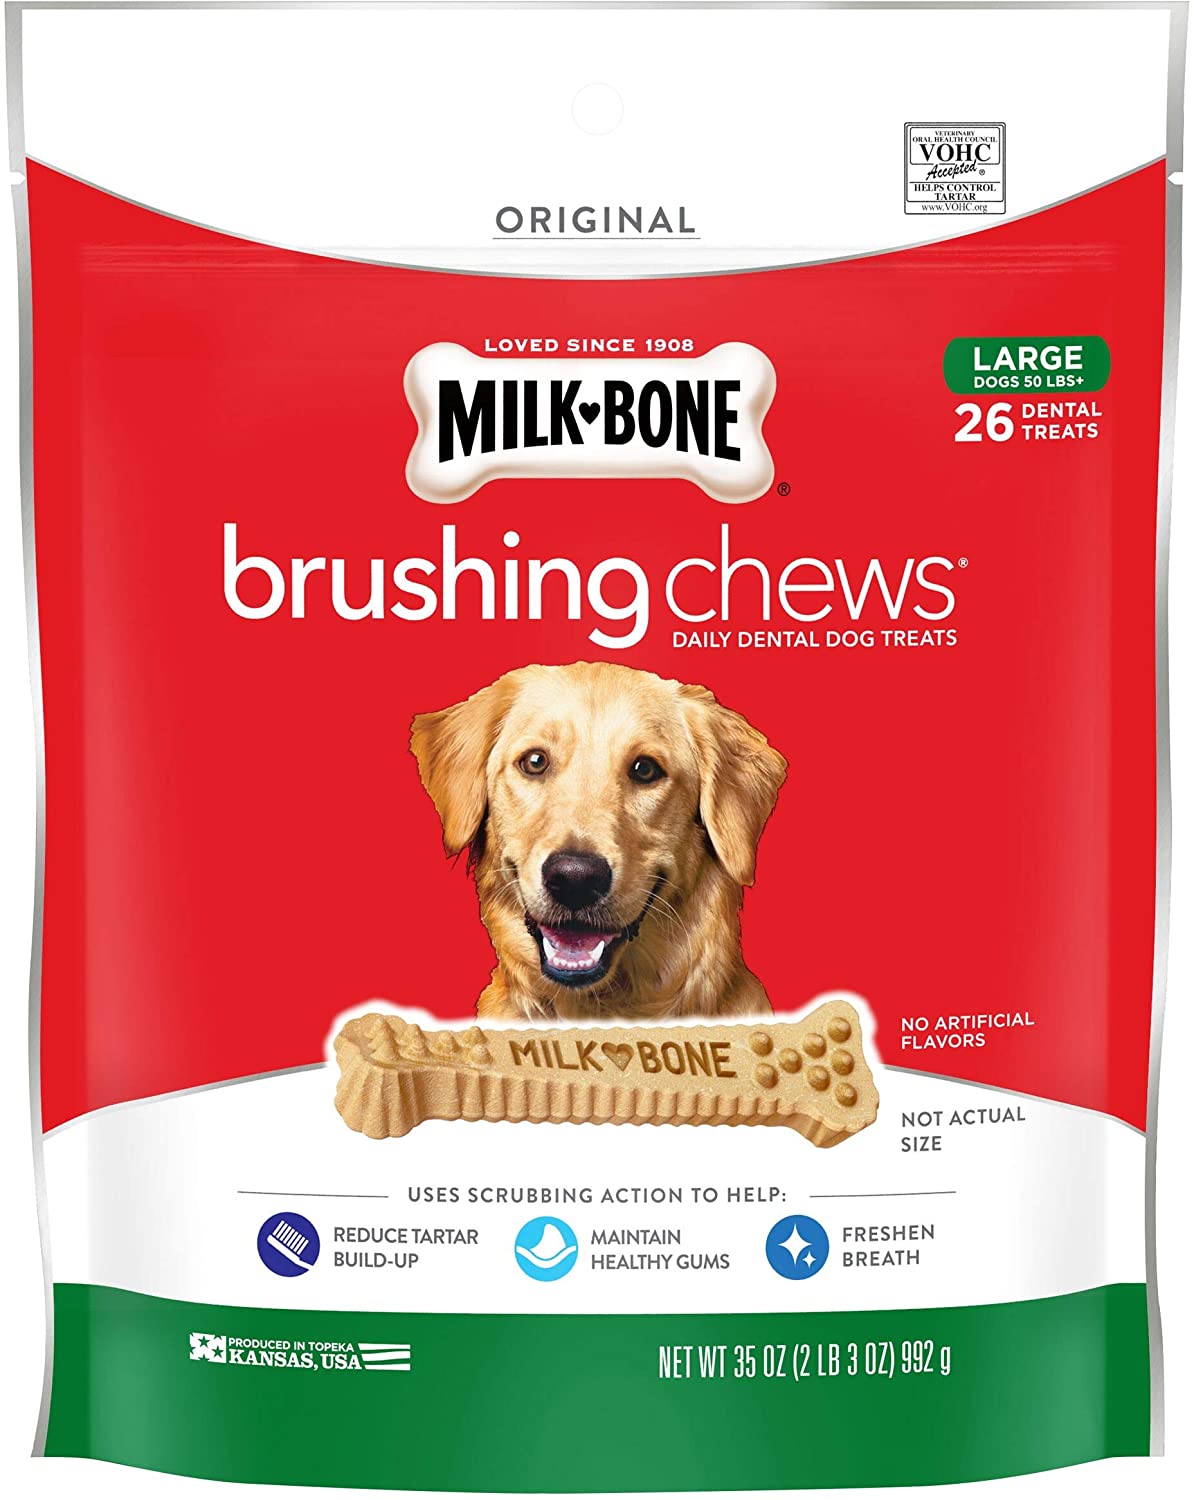 26-Ct Milk-Bone Original Brushing Chews Daily Dental Dog Treats $6.65 w/ S&S + Free Shipping w/ Prime or on $25+